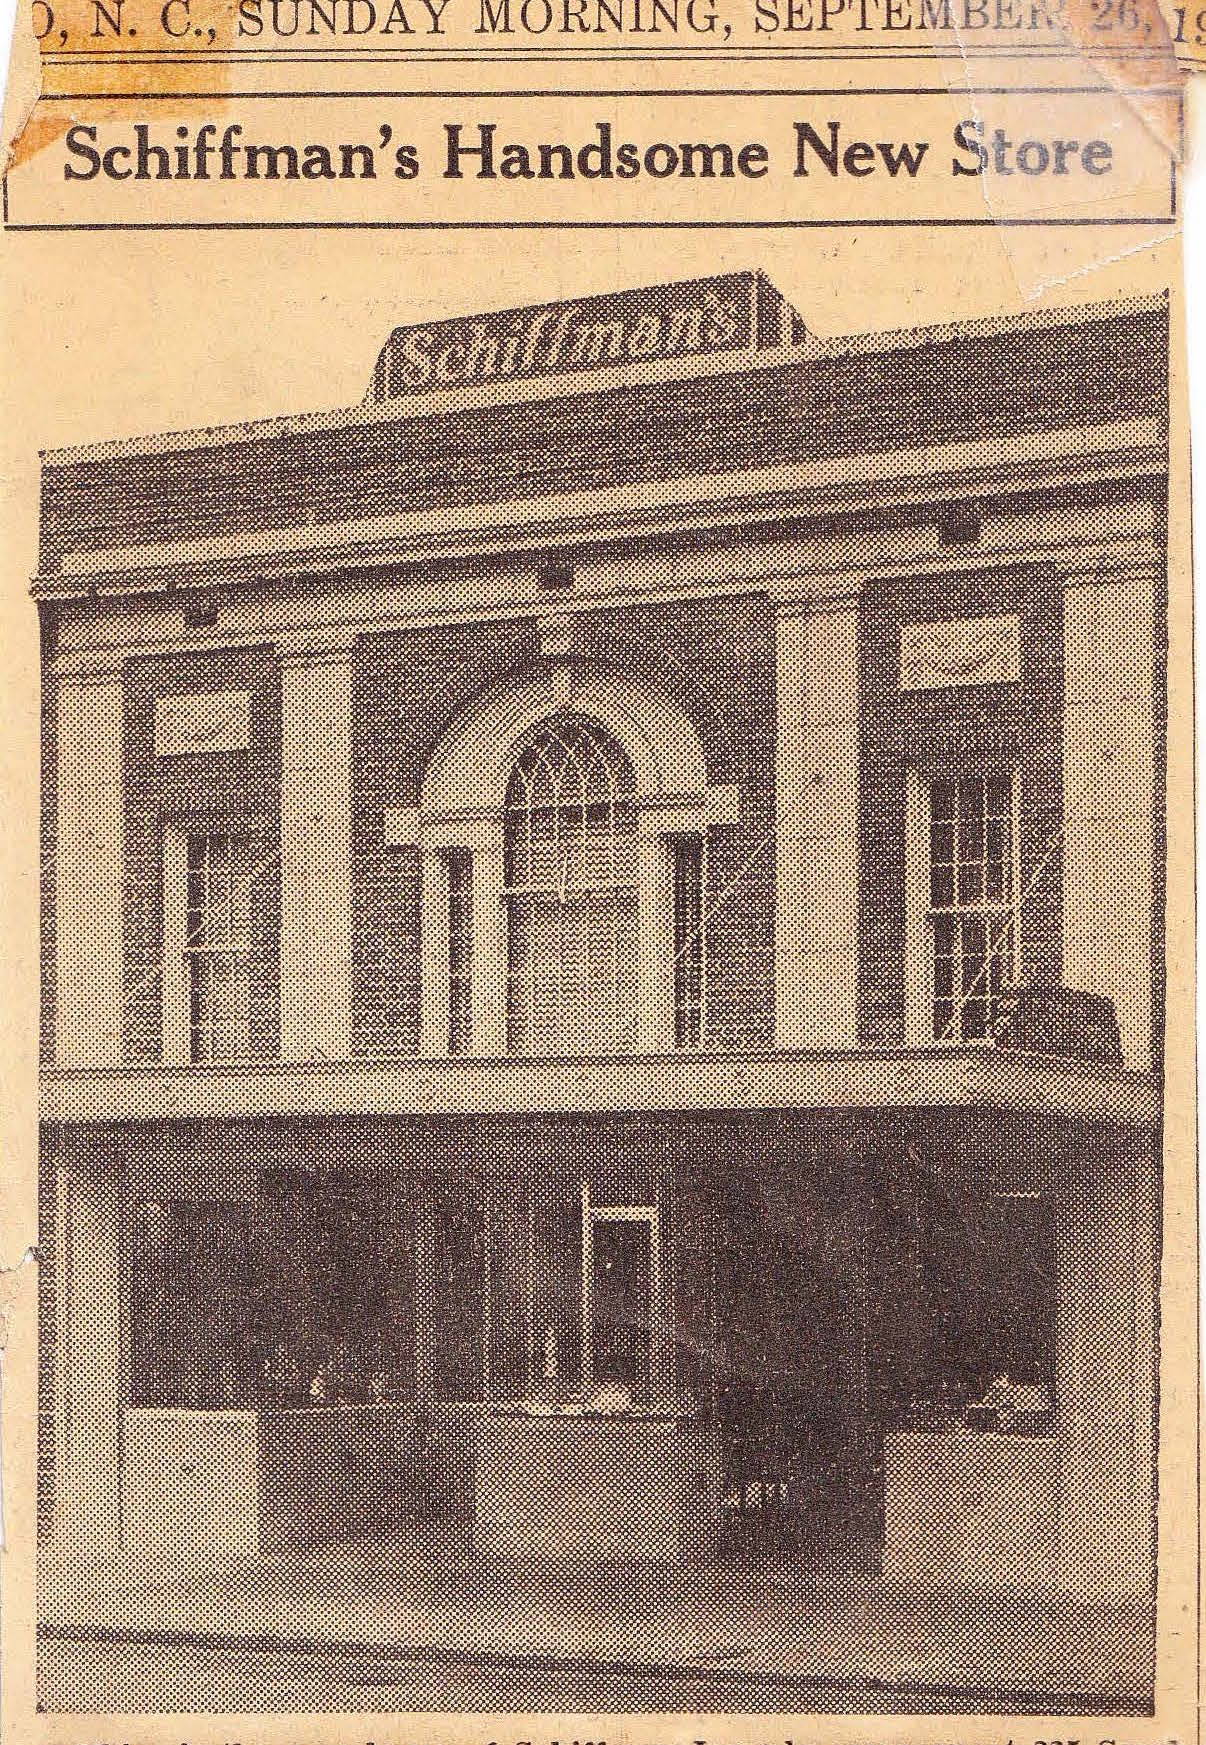 Schiffman's on Elm Street in 1937